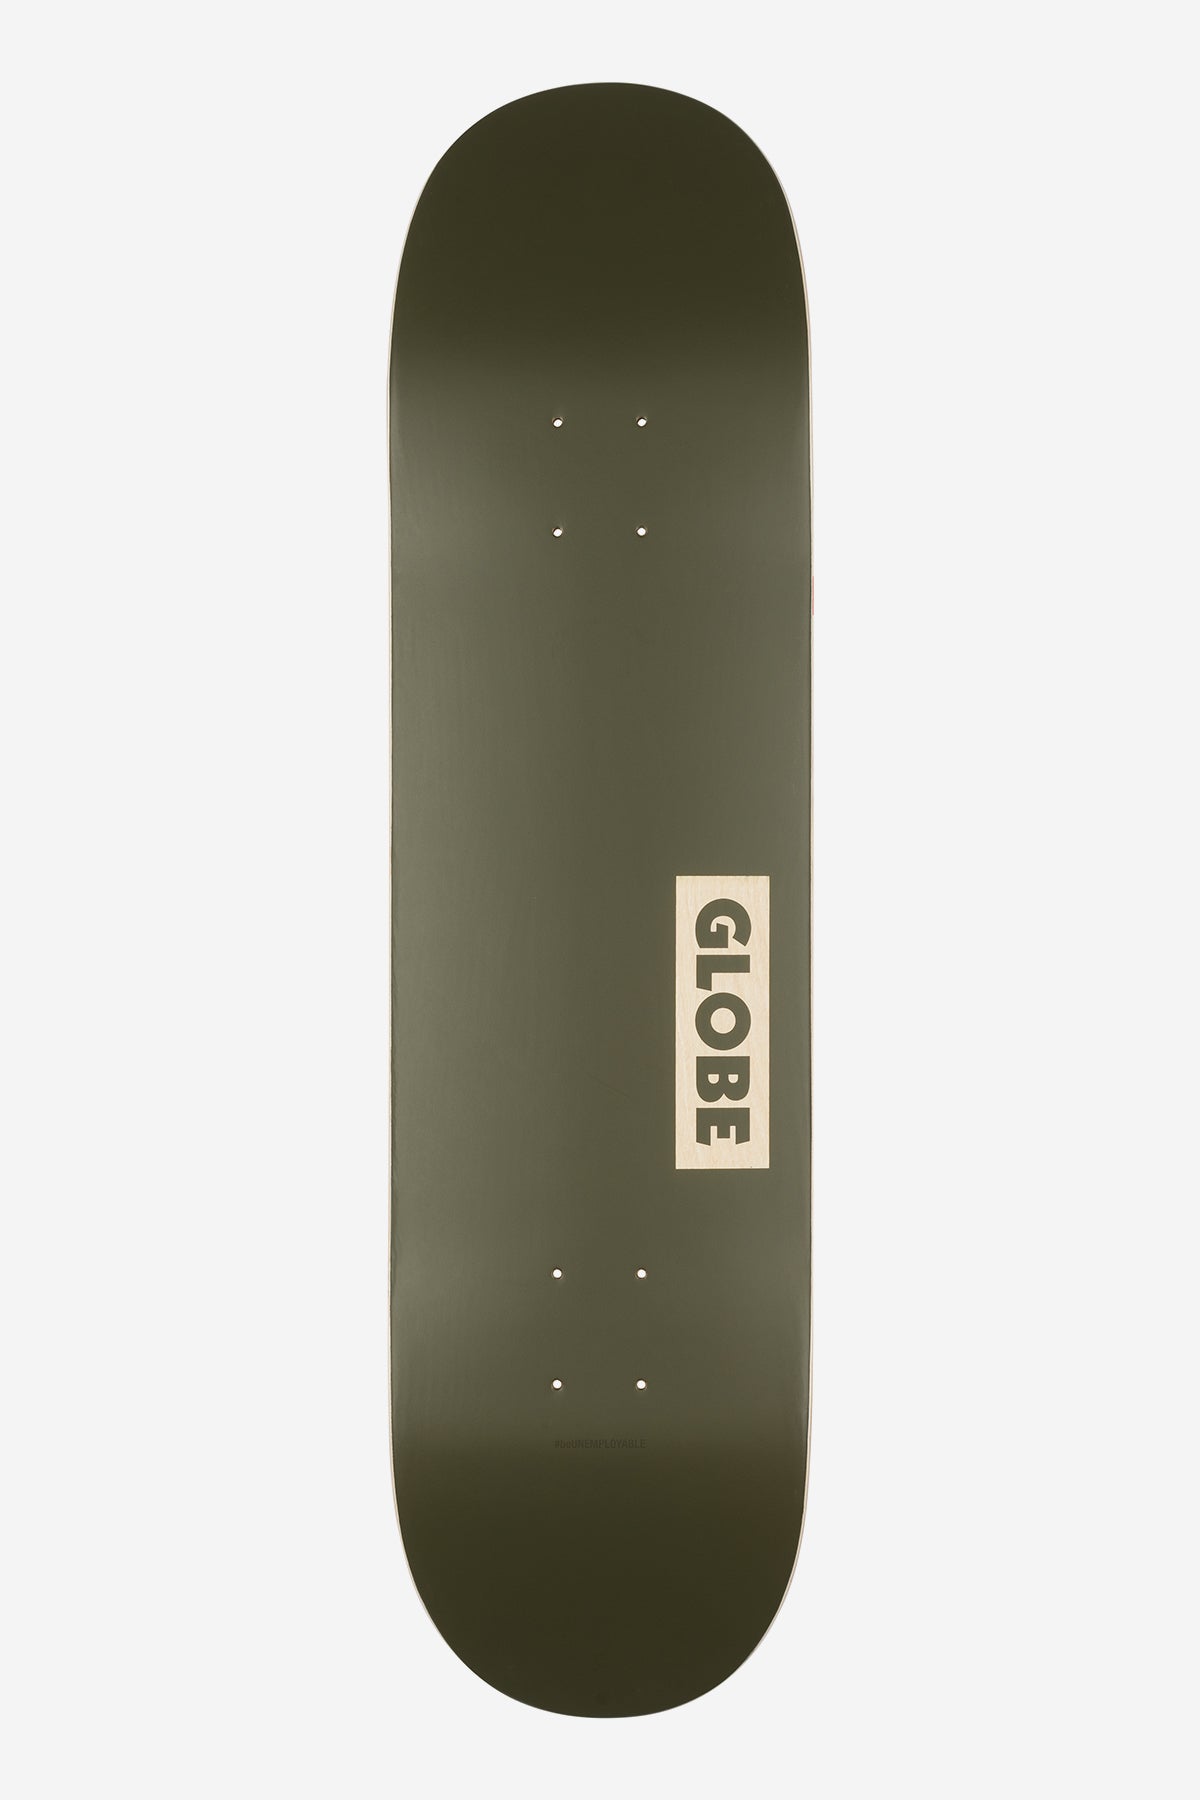 Goodstock - Fatigue Green - 8.25" Skateboard Deck